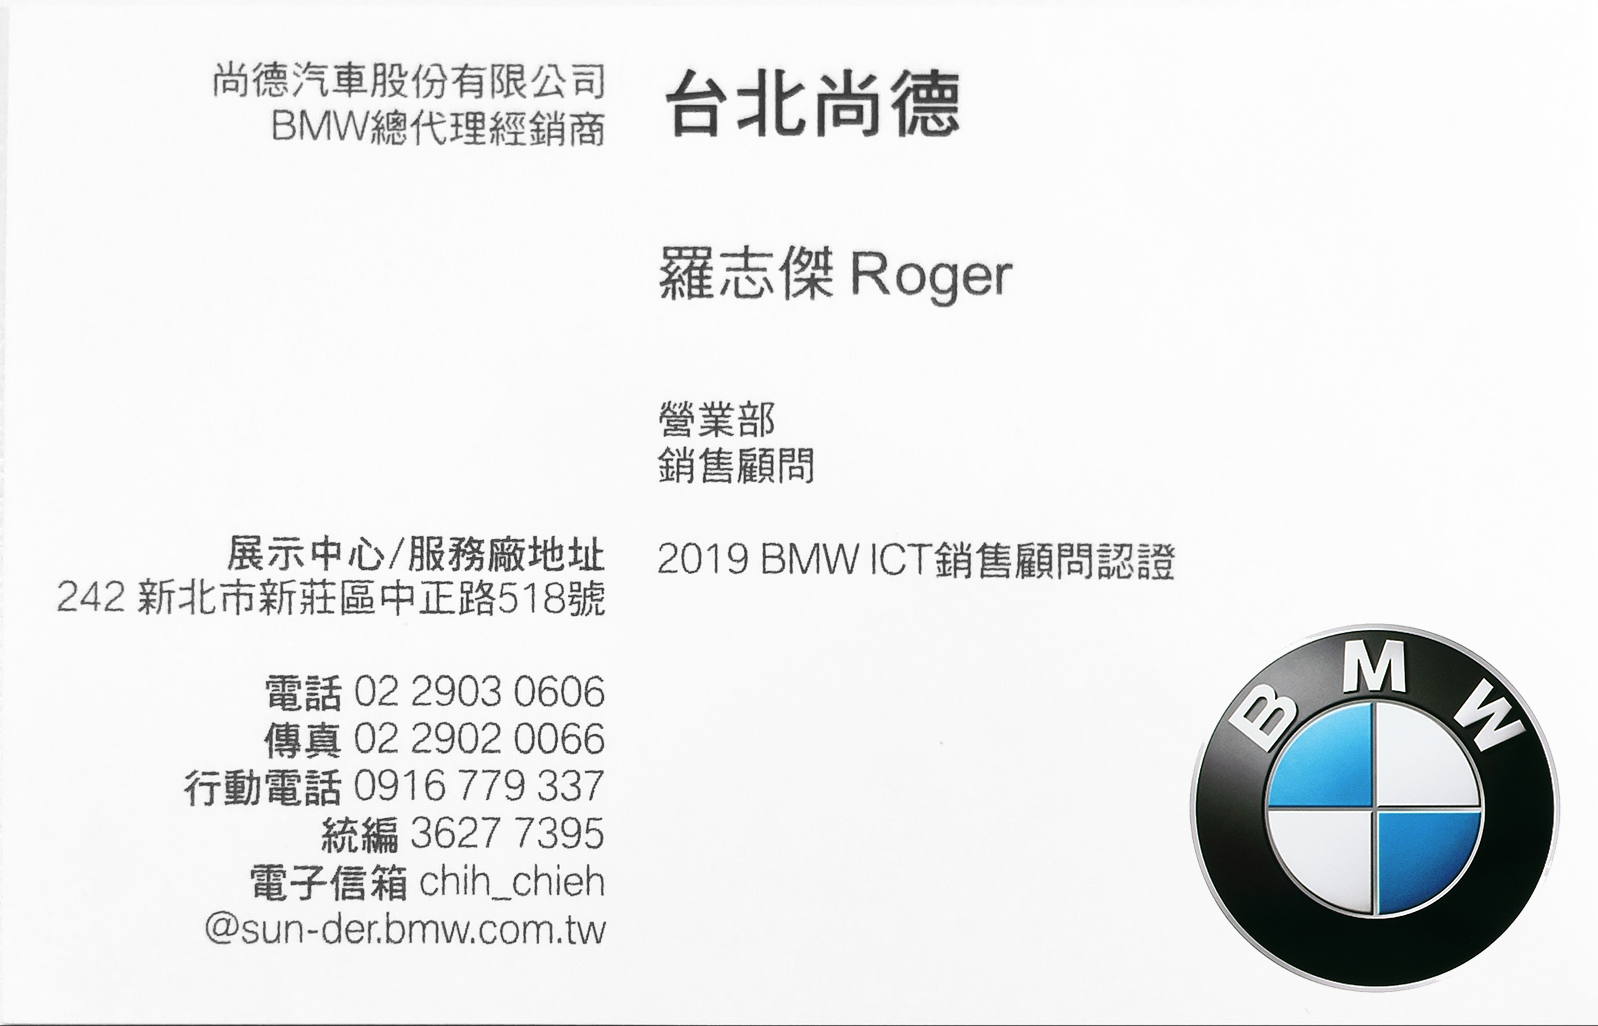 BMW 台北尚德 | BMW 寶馬暖爸 手機 0916-779-337 ROGER 2019 ICT 銷售顧問認證 | BMW汽車-尚德新莊展示中心 | 尚德汎德 | 新莊BMW業務